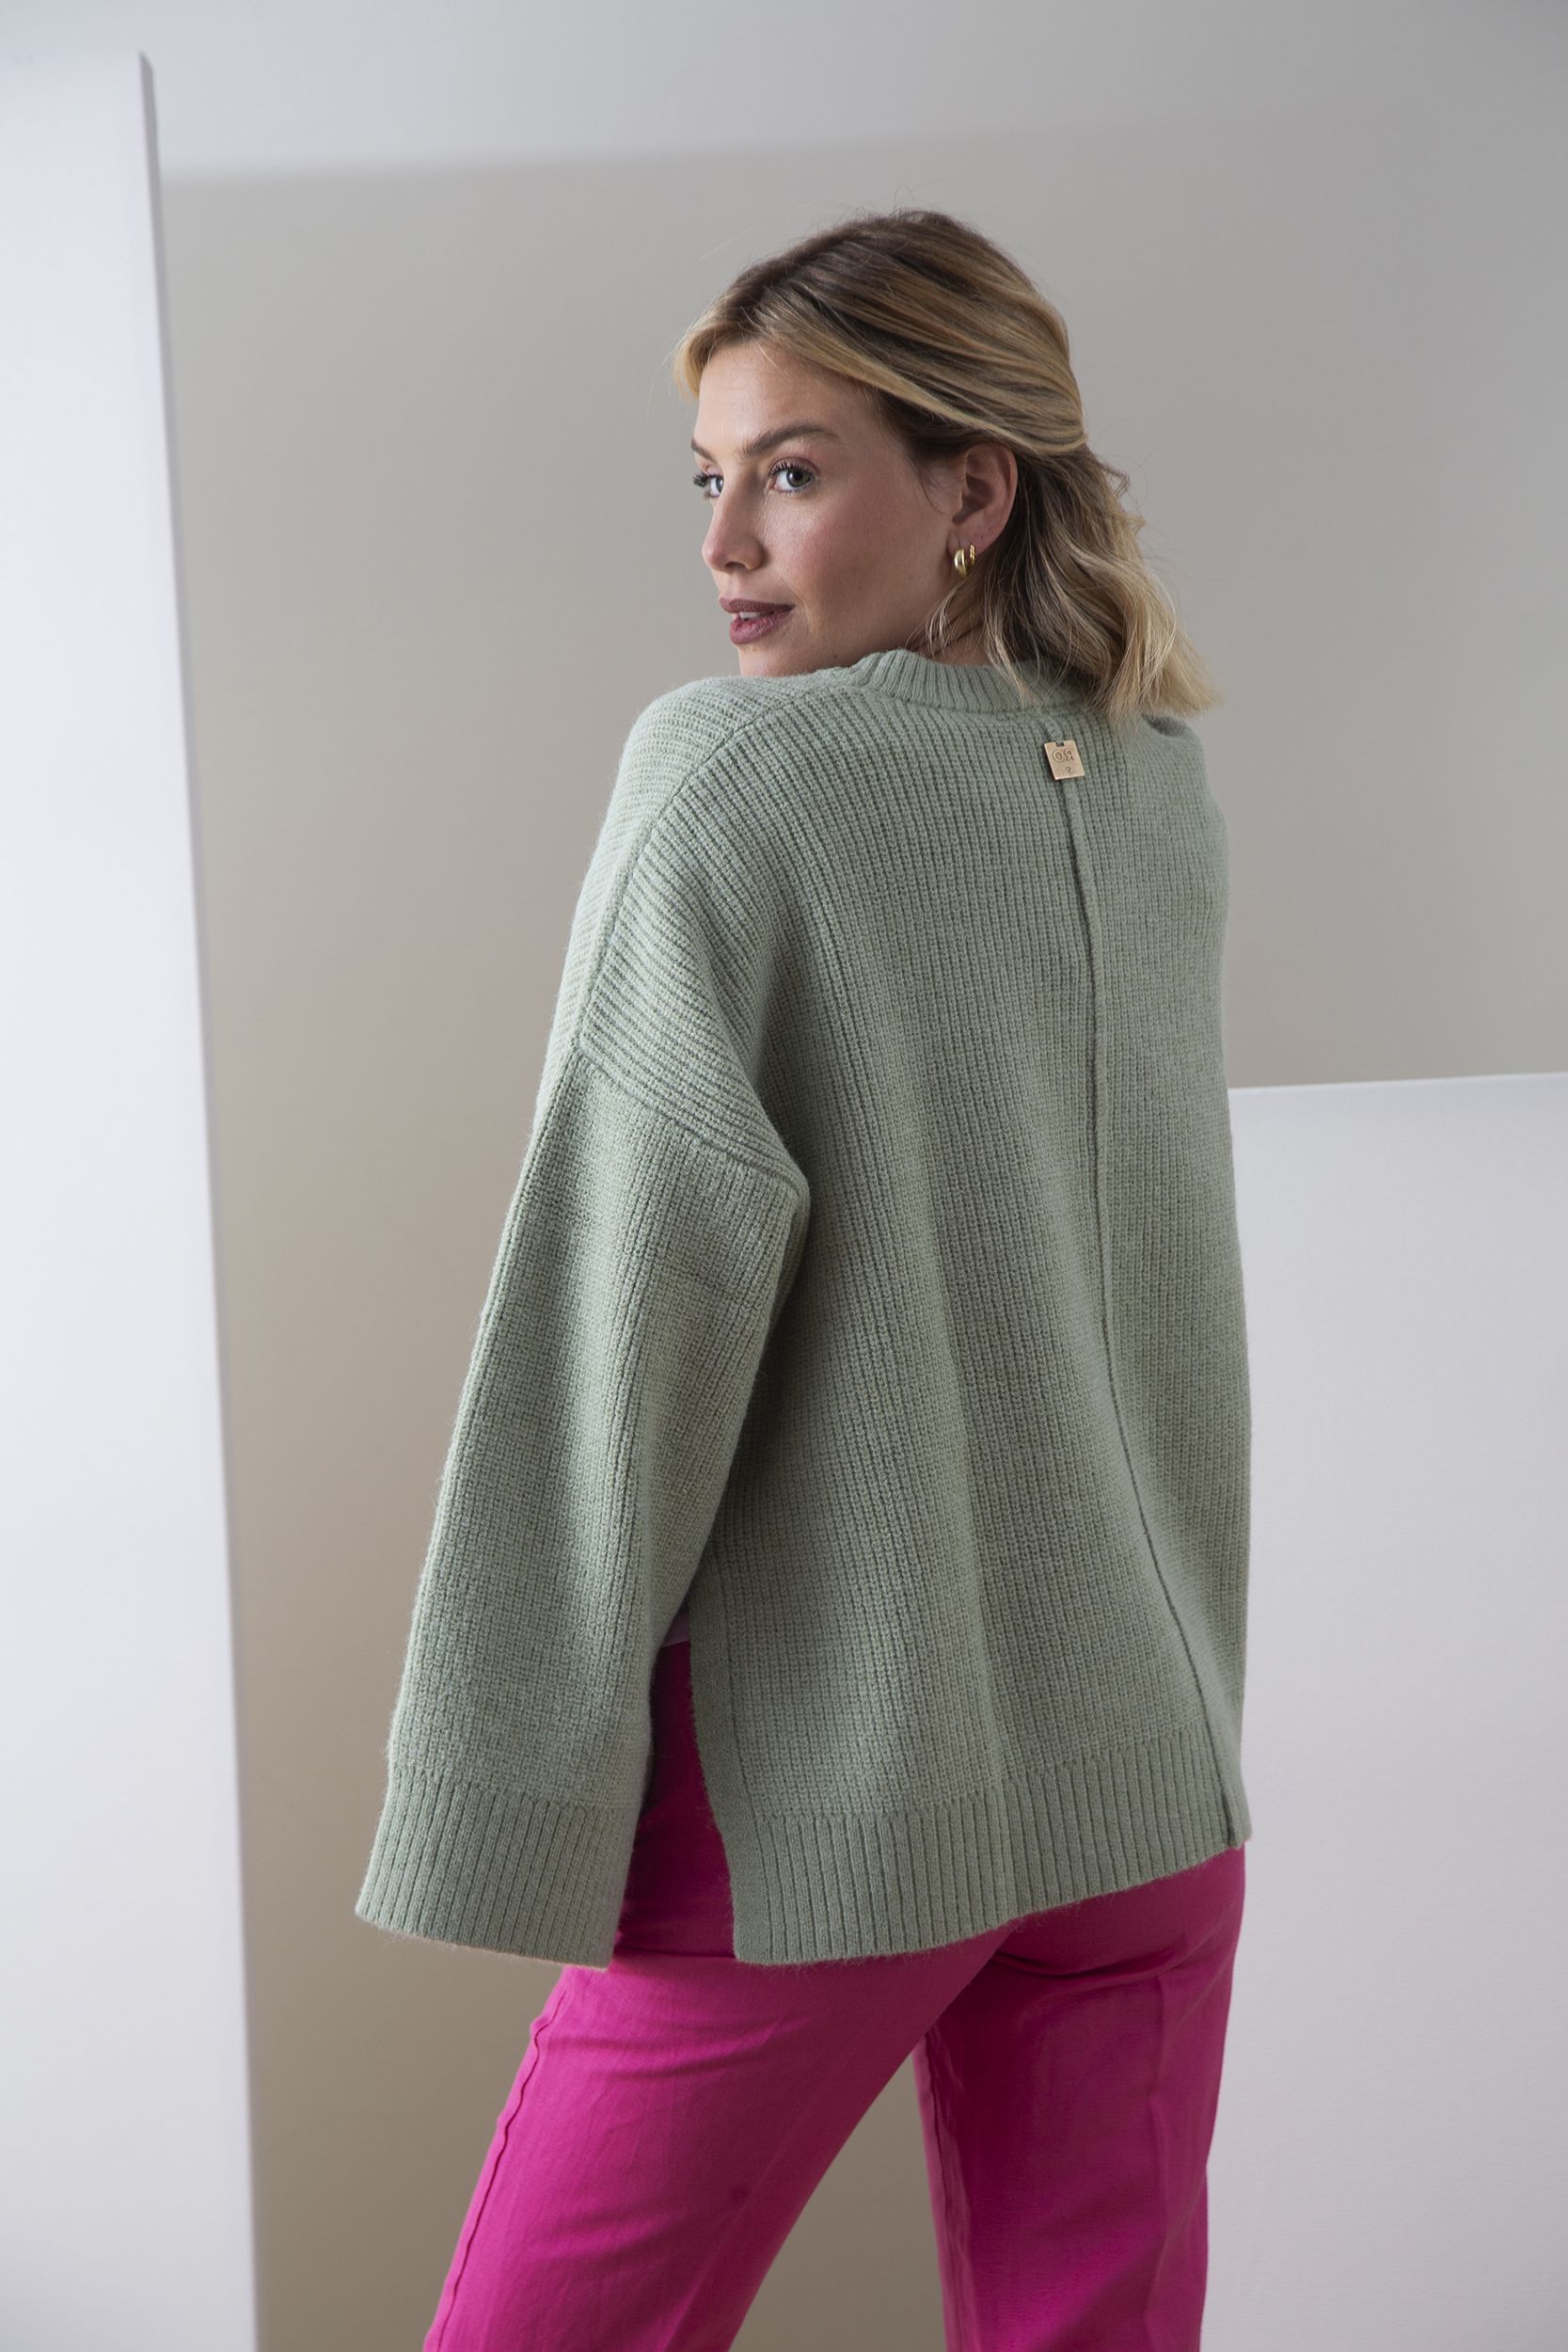 758-sweater-yamila-green-3.jpg